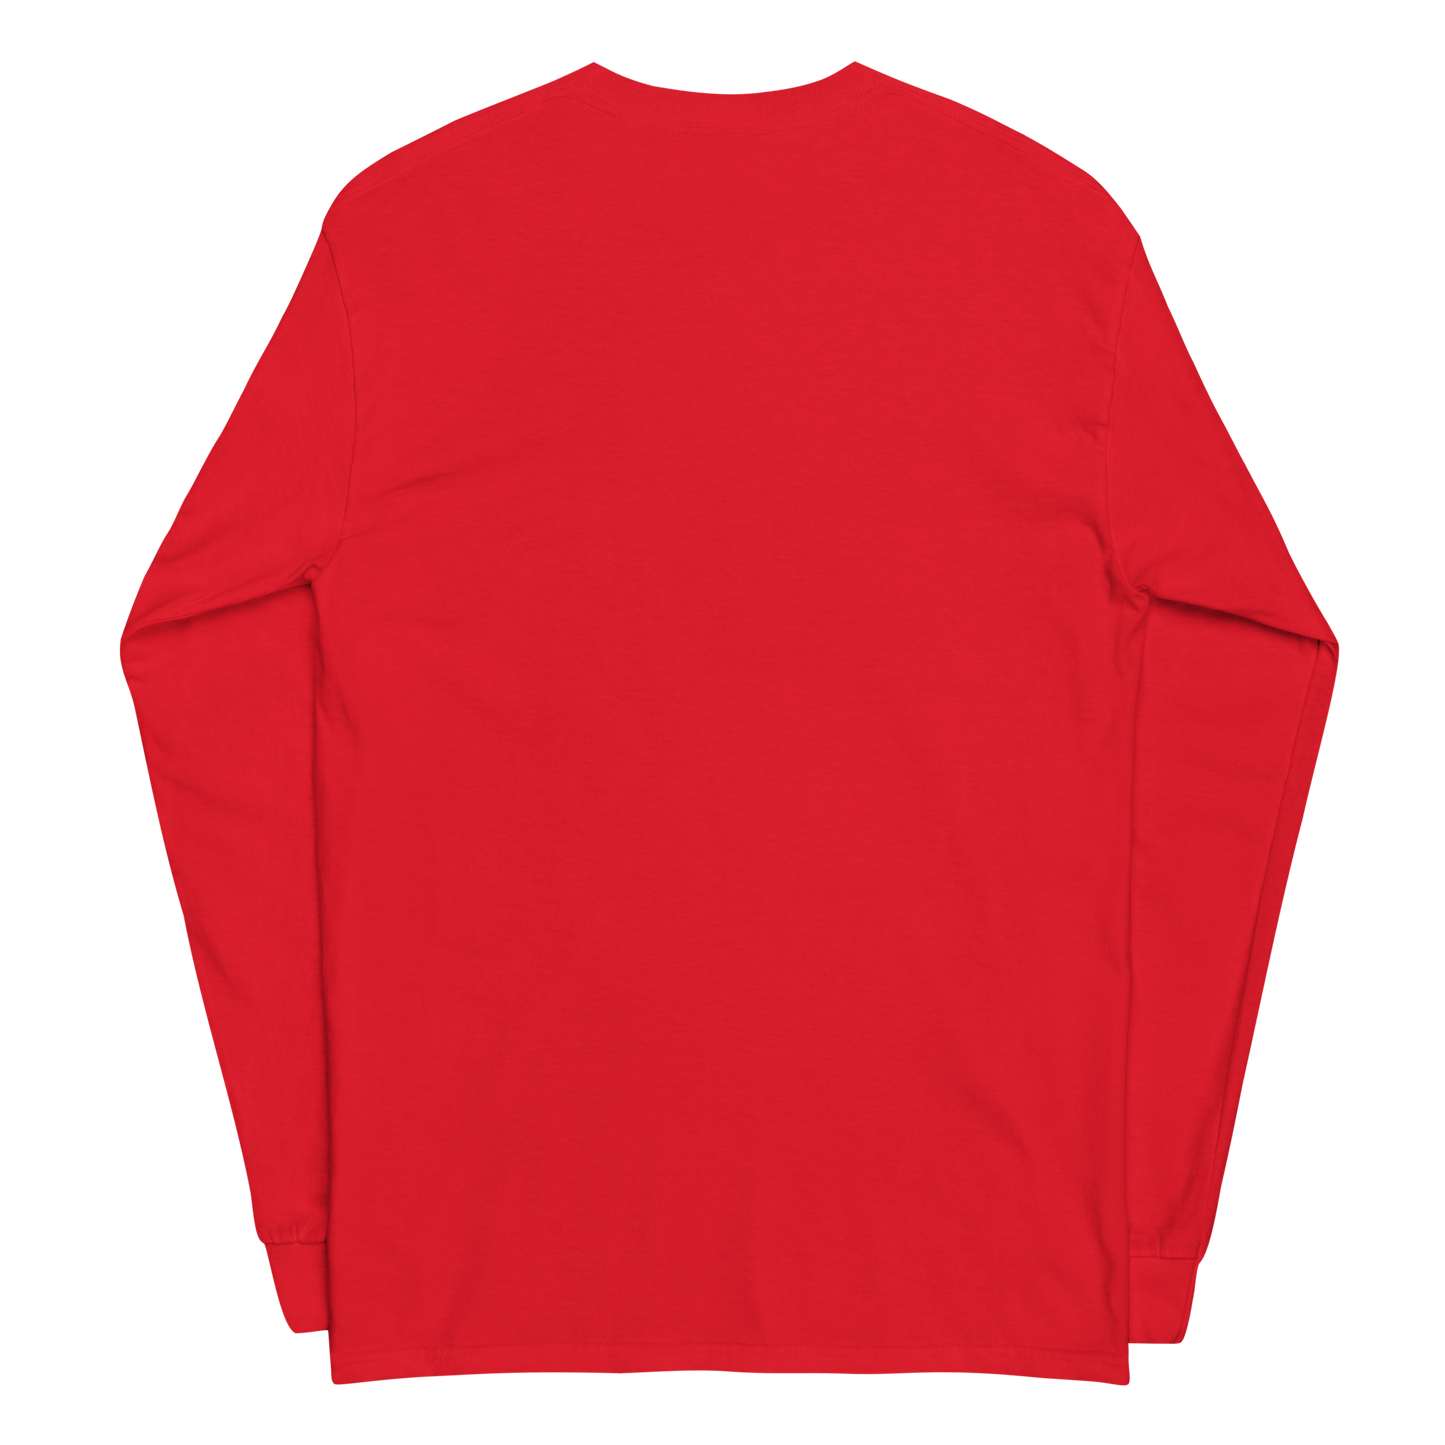 Camicia a maniche lunghe - Discreto V1.0 - Rossa - Premium